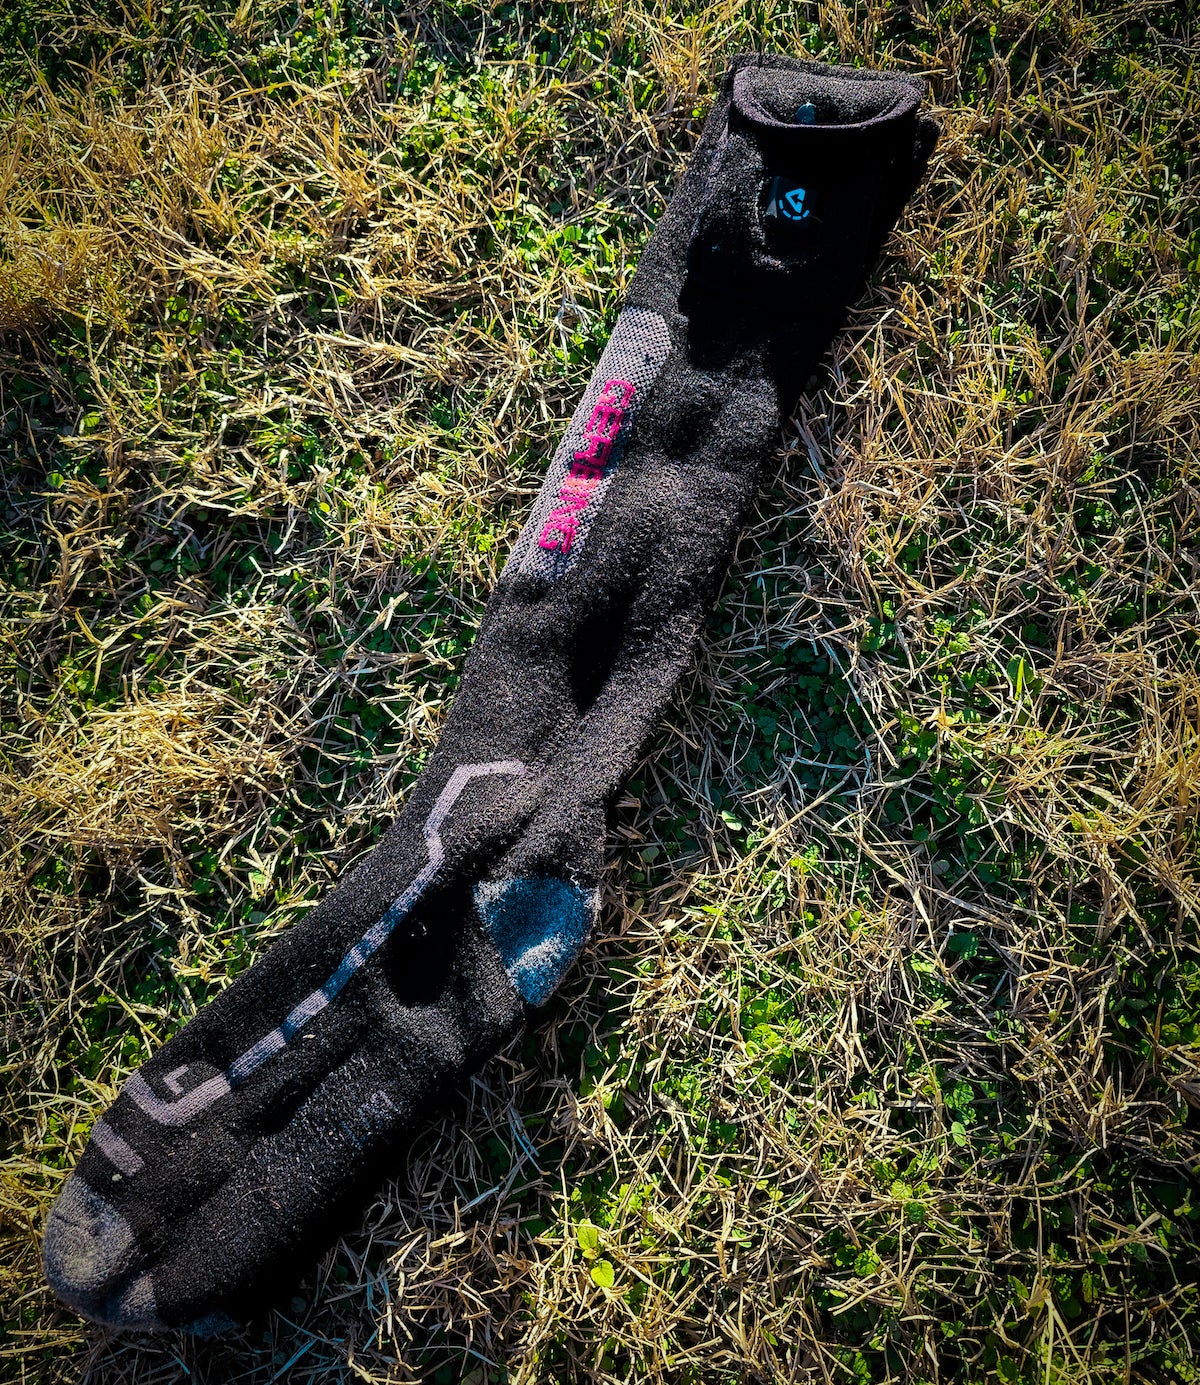 Pair of Gerbing heated socks lying on grass